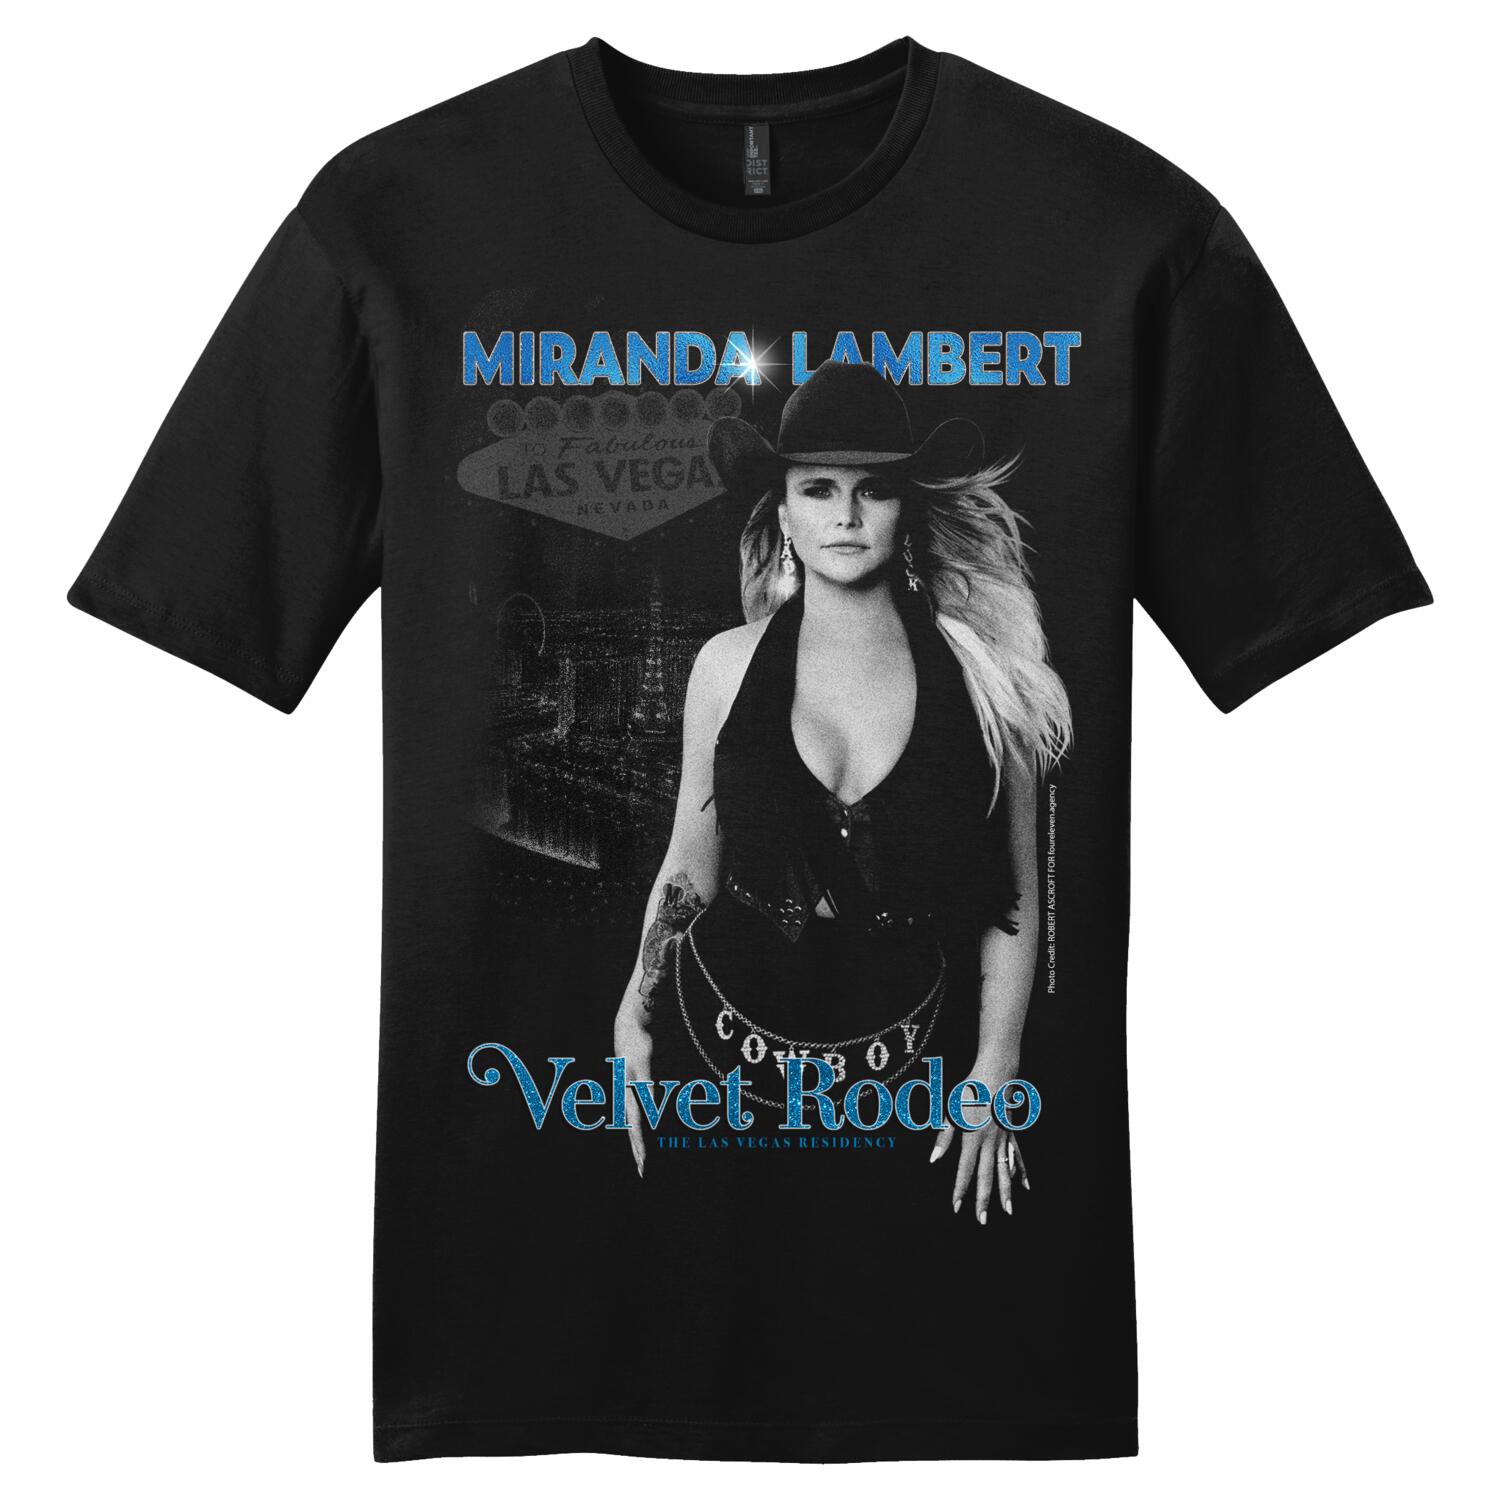 Front features image of Miranda over the Las Vegas skyline with text "Miranda Lambert. Velvet Rodeo. The Las Vegas Residency."